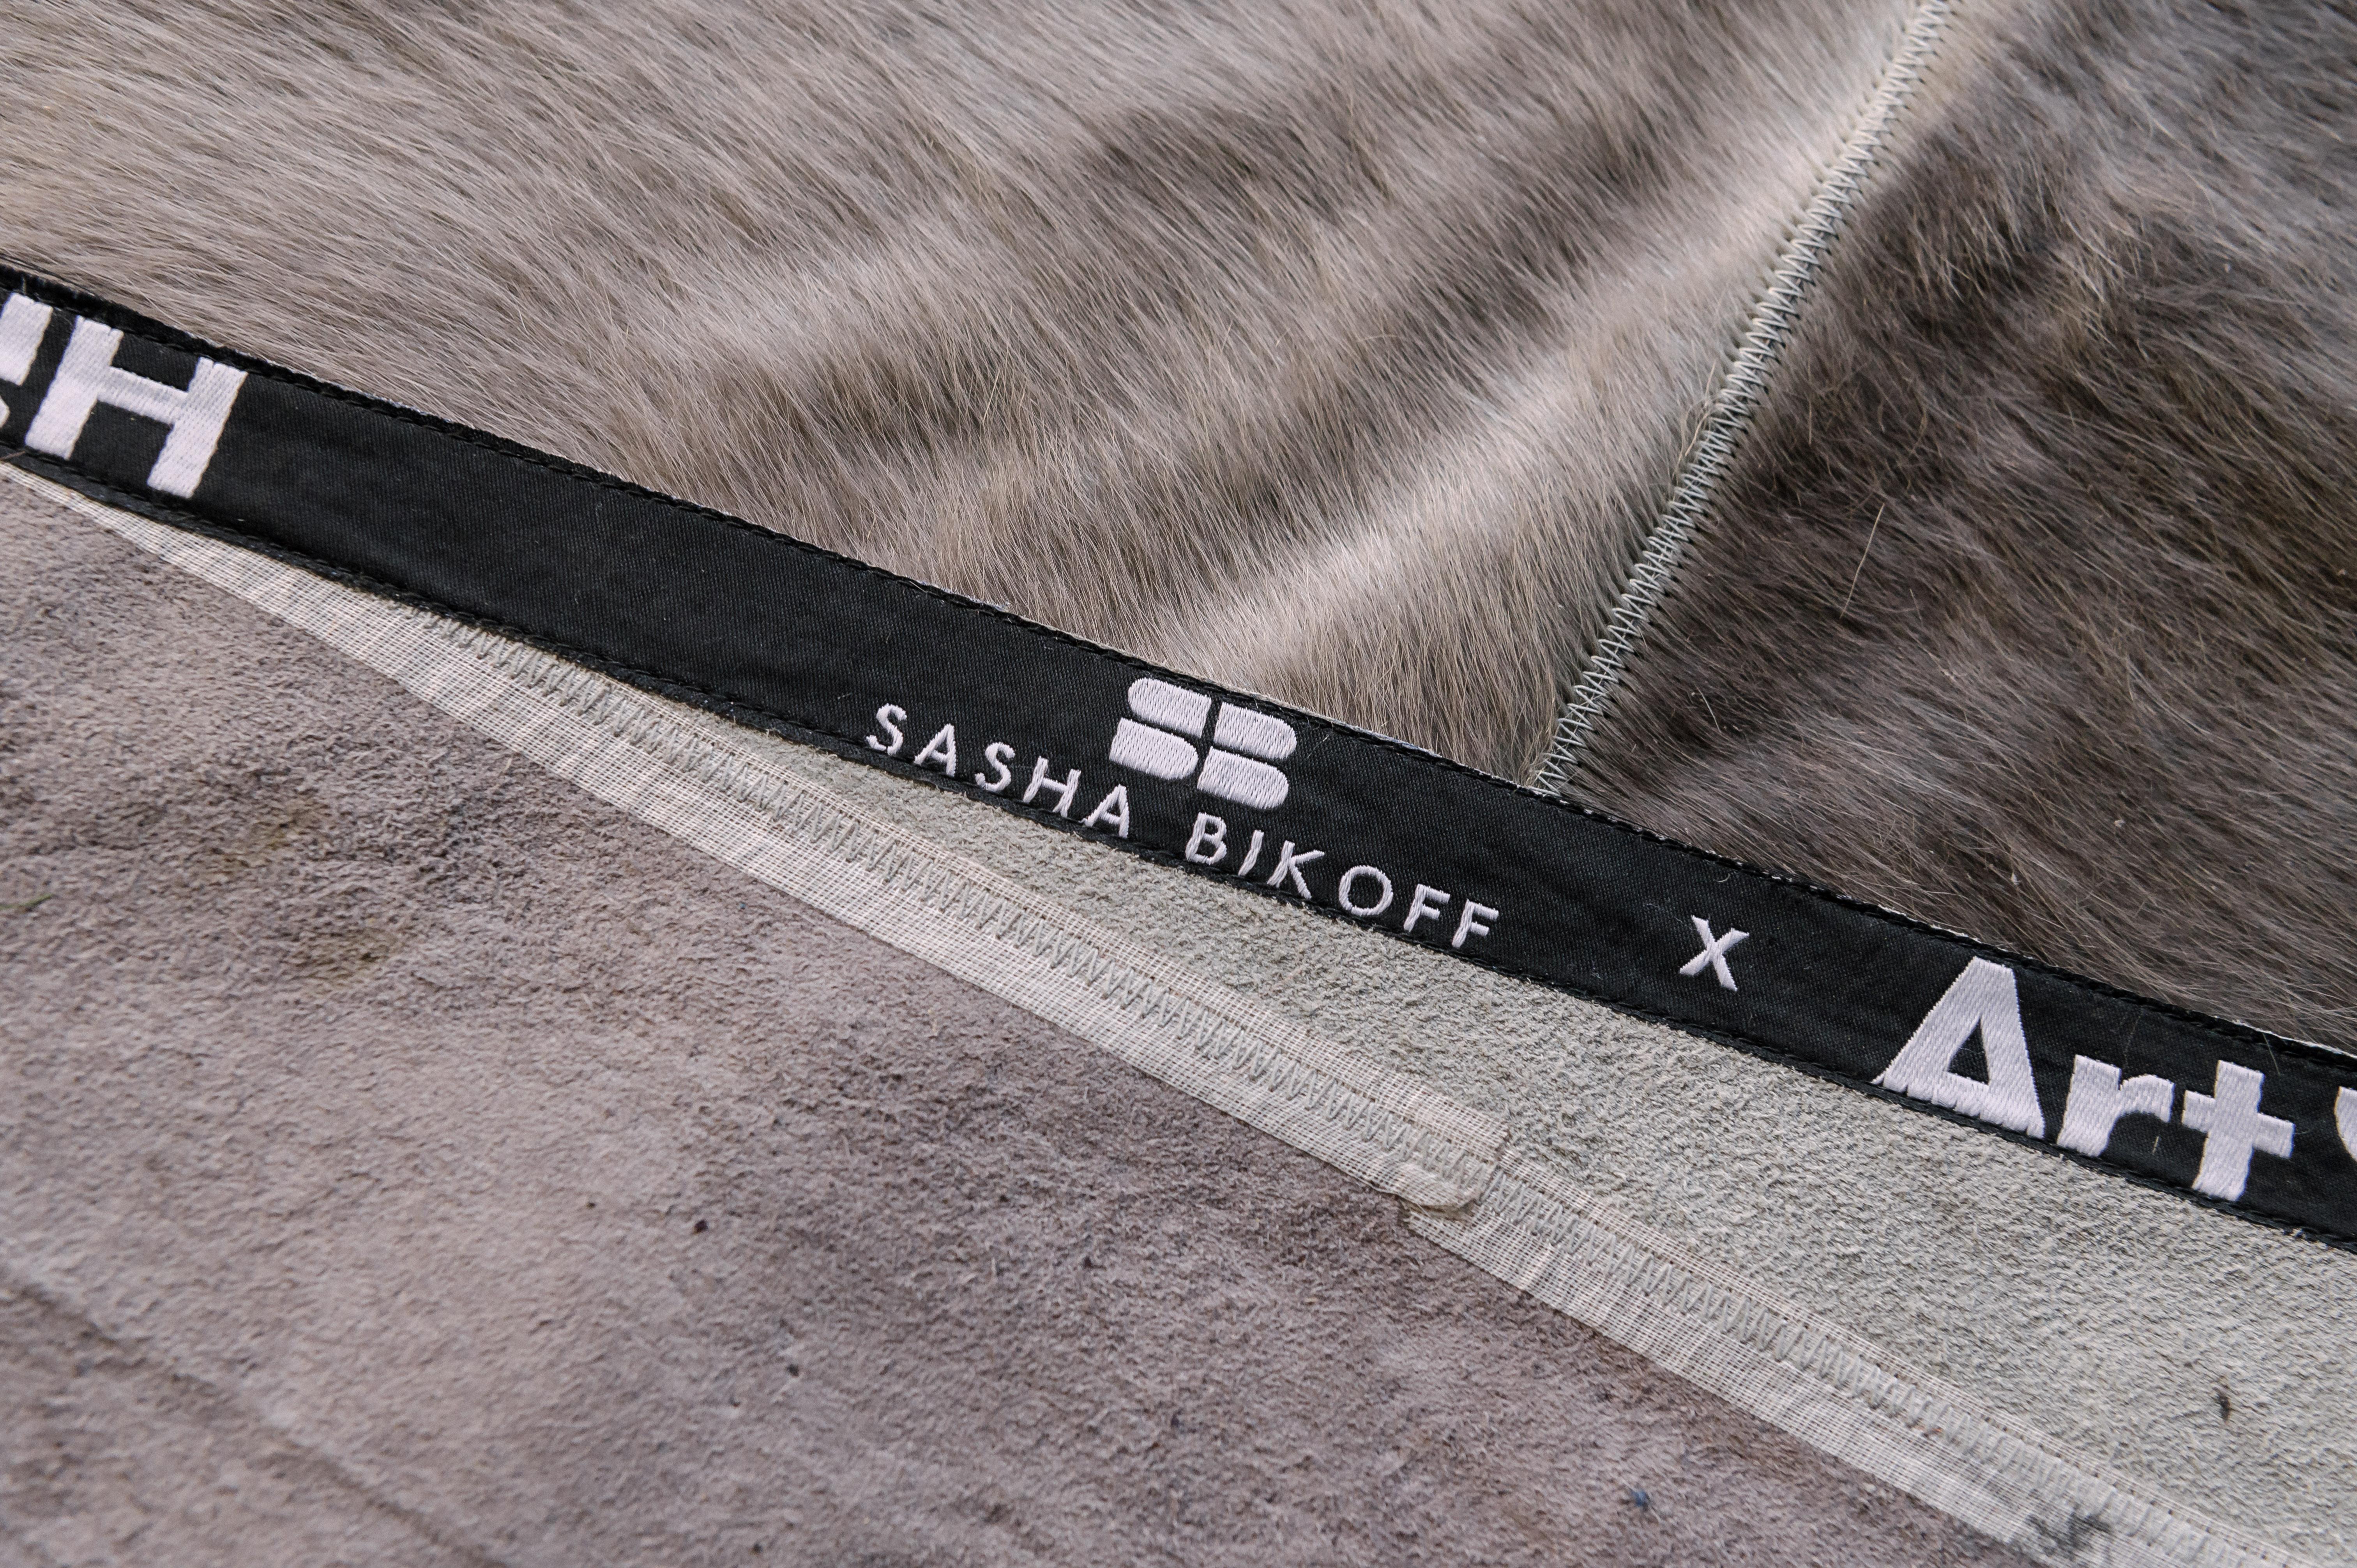 Machine-Made Sasha Bikoff X Art Hide Customizable Cowhide Taupe Pastiche Area Rug XX-Large For Sale